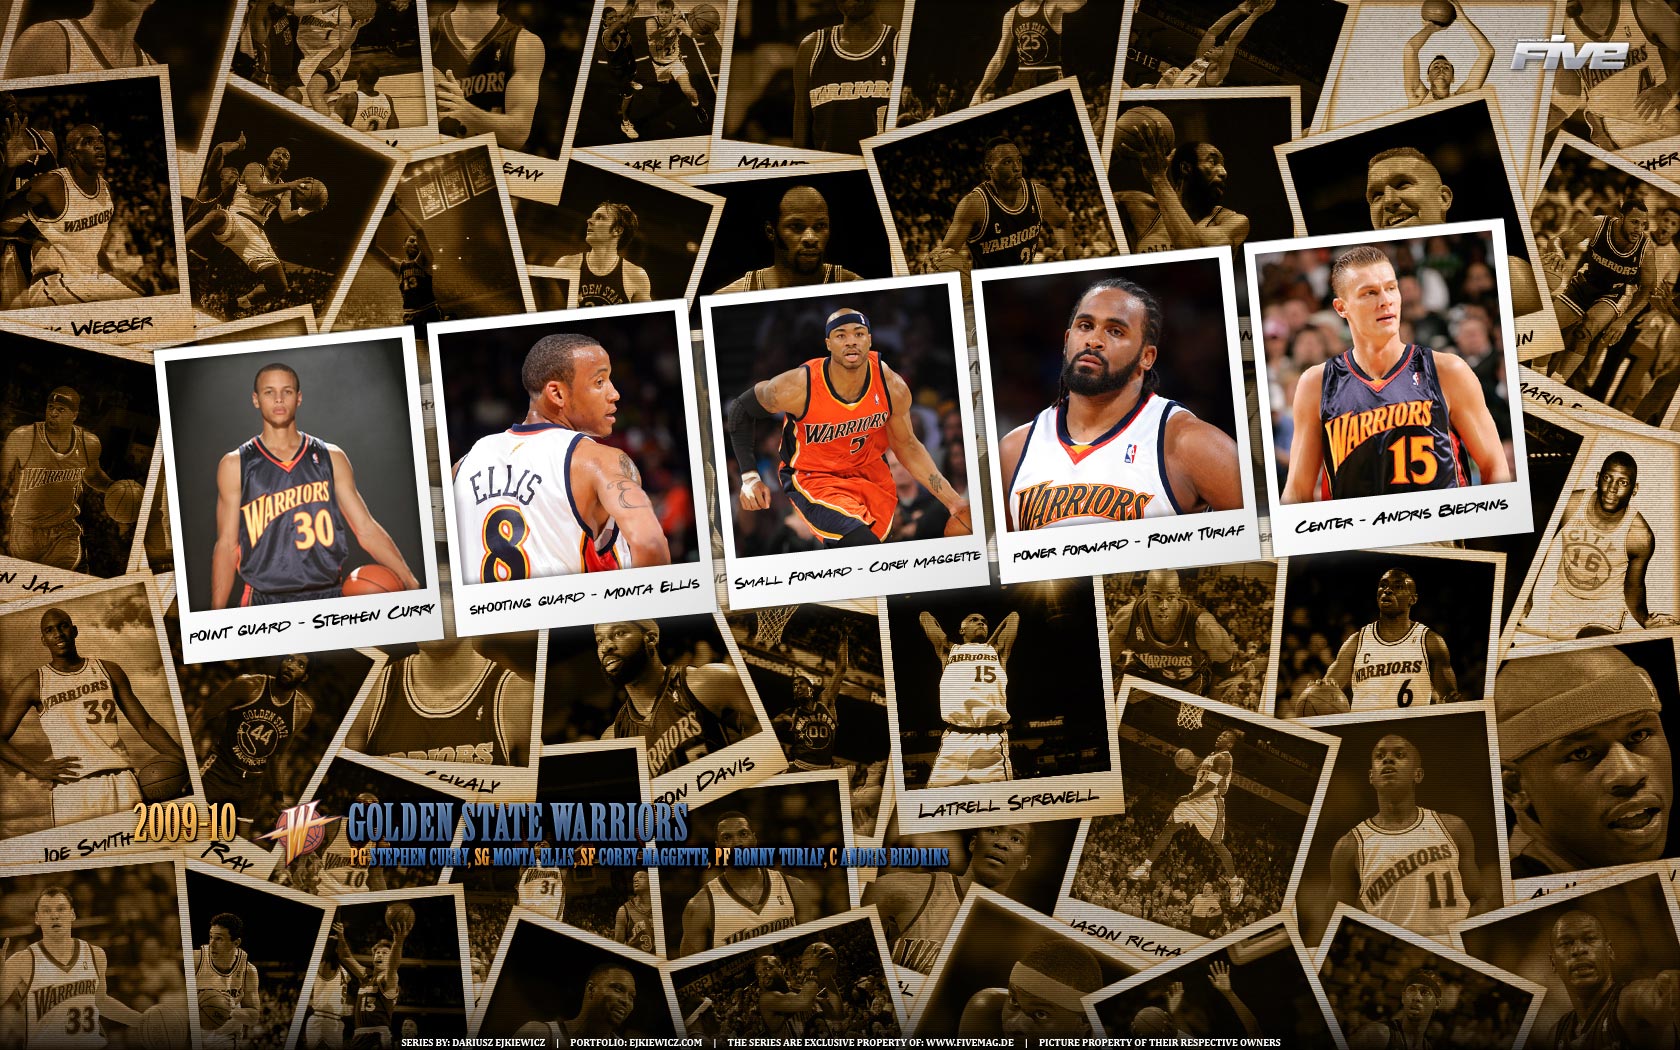 Next is widescreen wallpaper of Golden State Warriors 2010 starting five: 